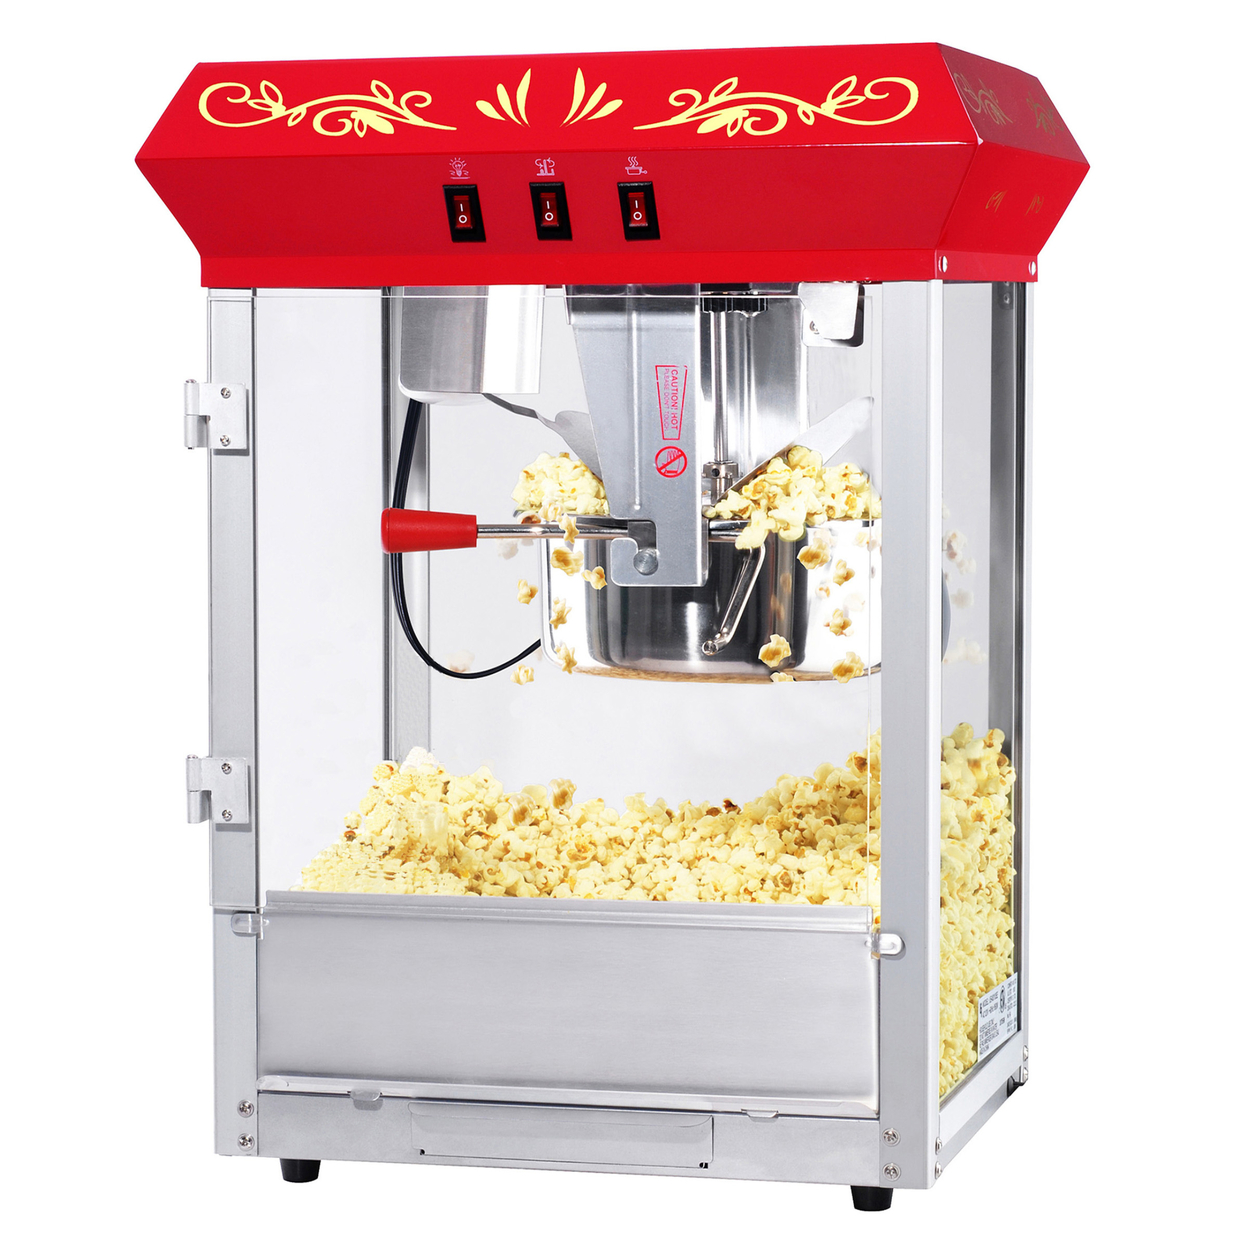 Antique Style Popcorn Machine 8oz Popper, Kettle, Drawer, Warming Tray, Red